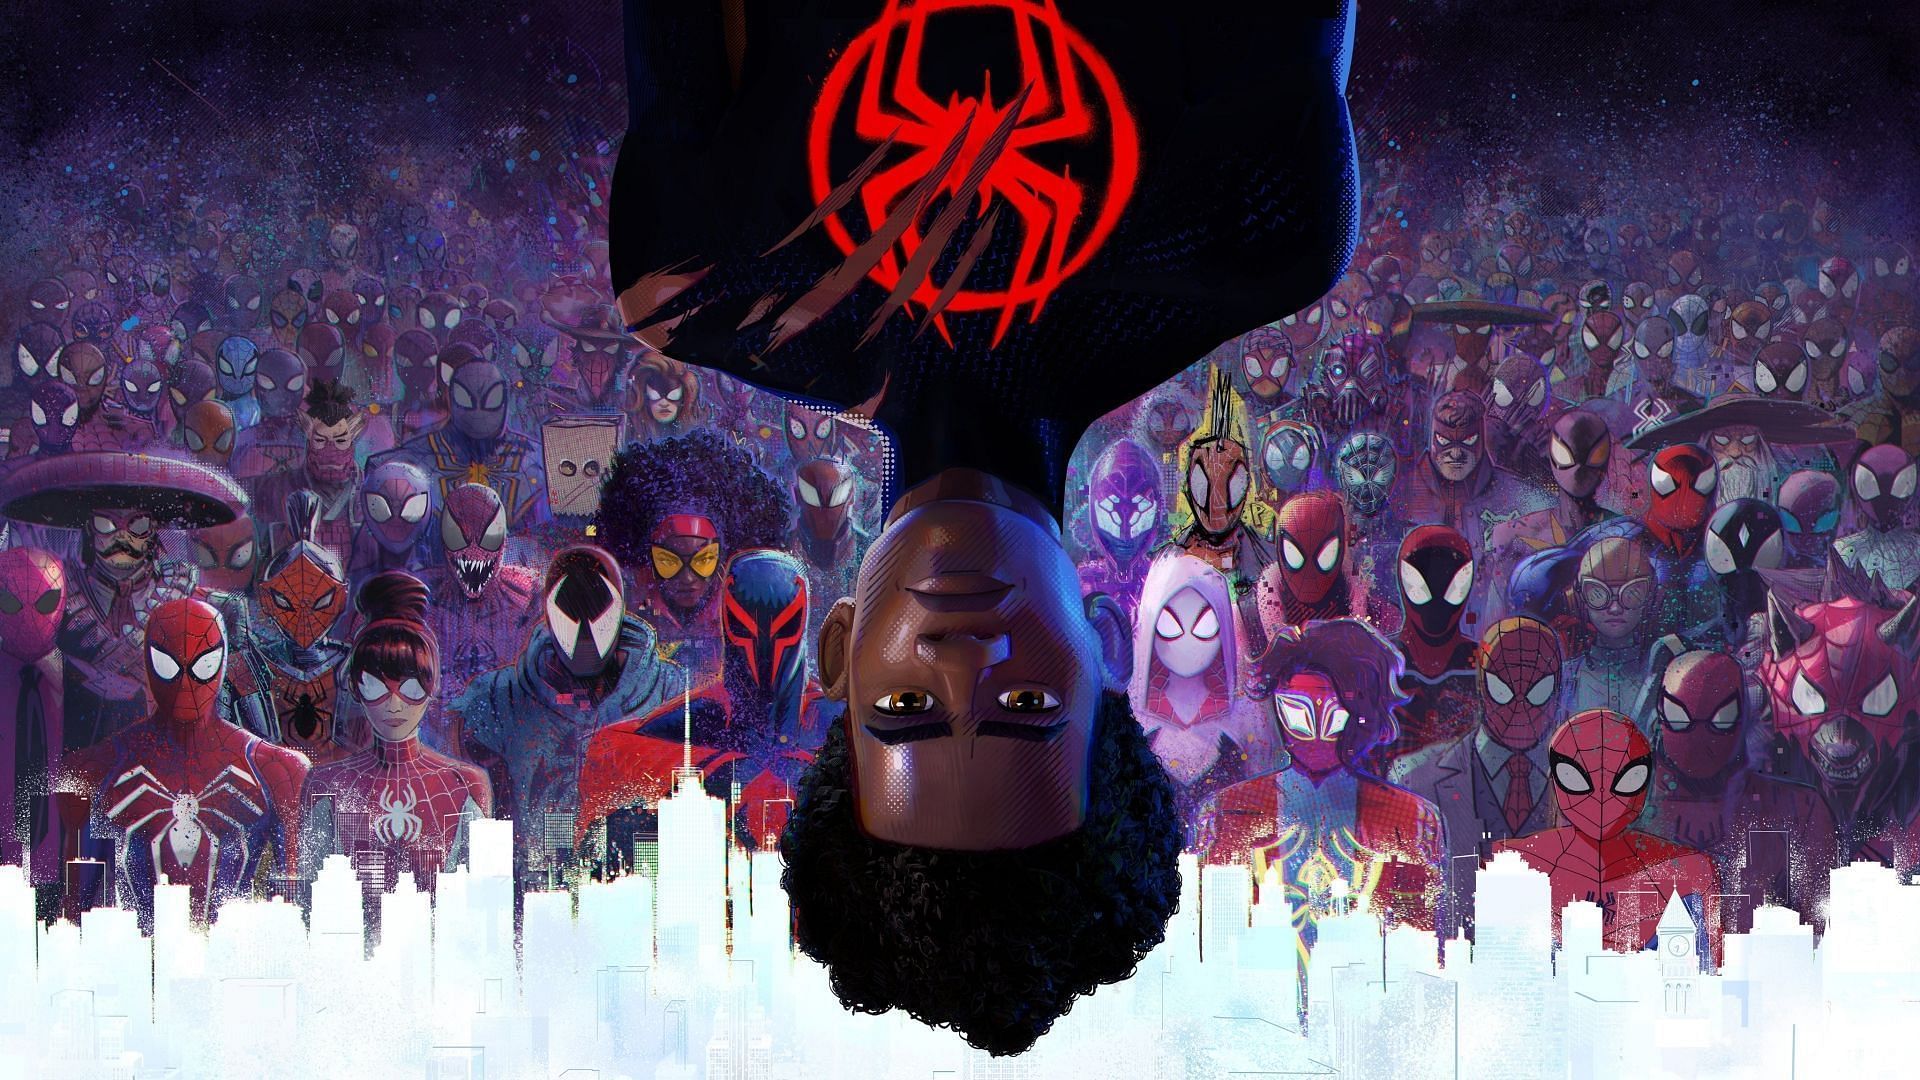 Spider-Verse 2 poster (Image via Sony)